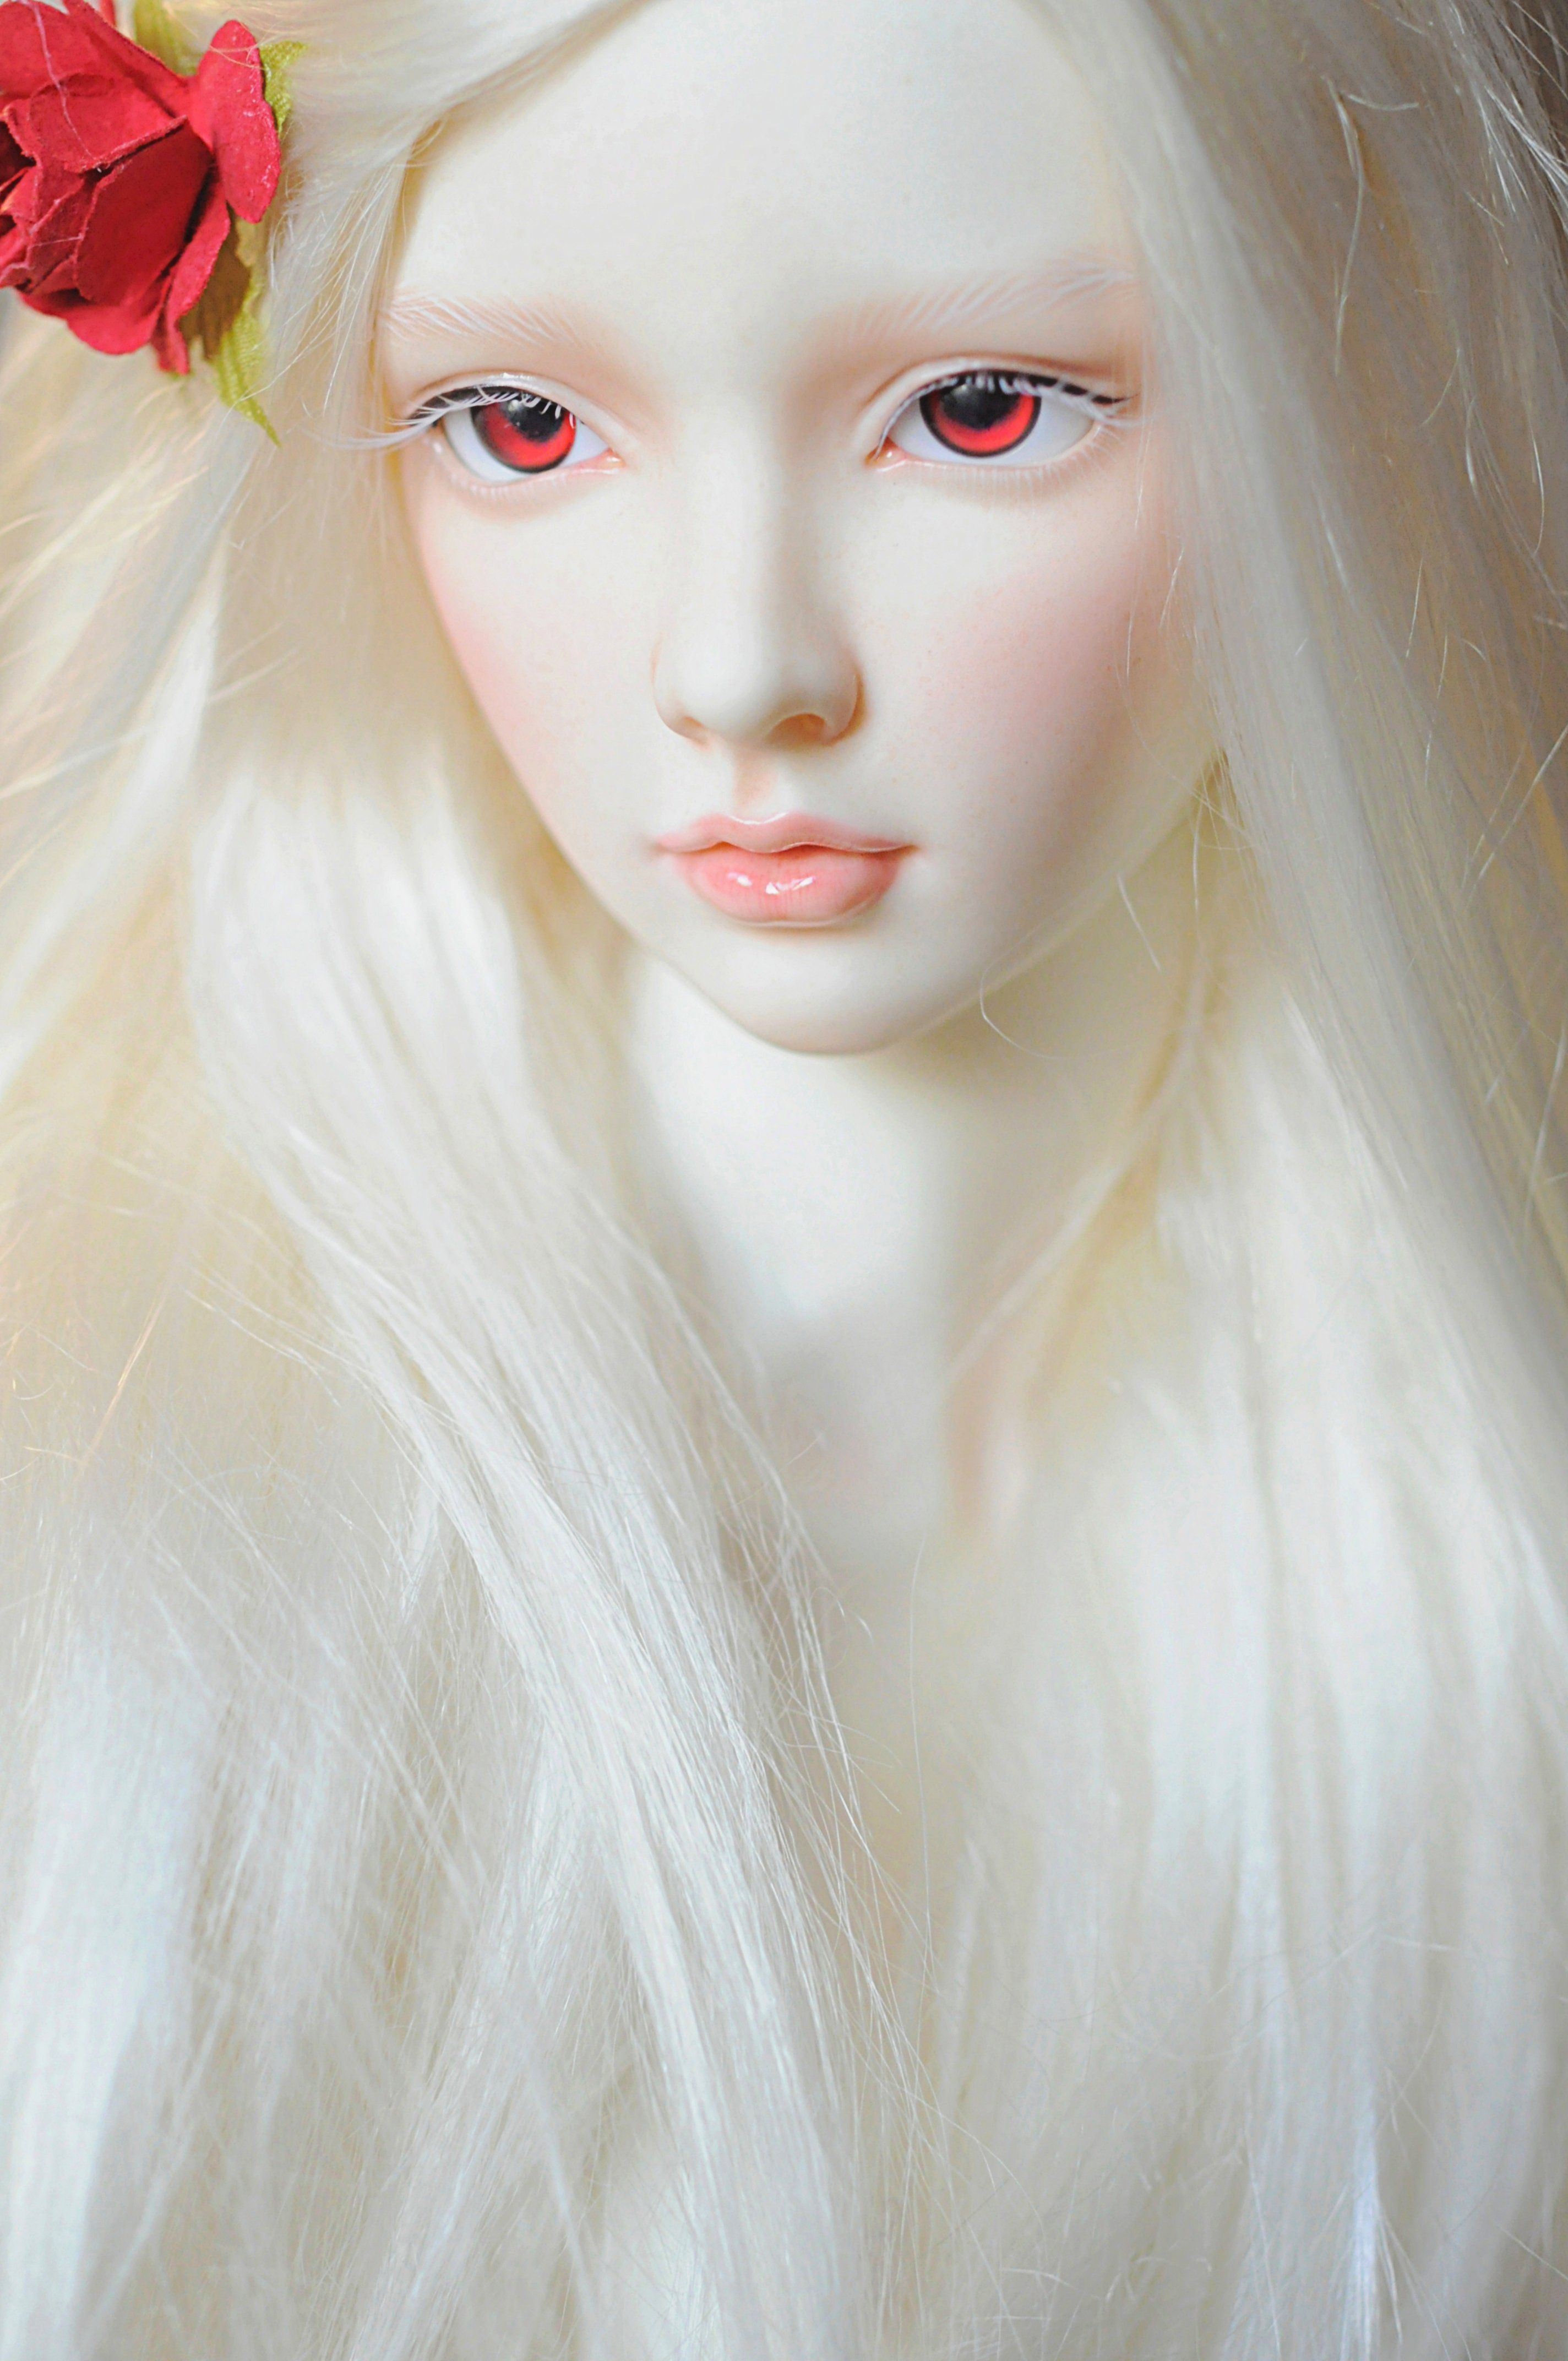 Doll baby toys girl beautiful long hair red eyes rose blonde cute wallpaperx4288. Rose blonde, Beautiful long hair, Long hair styles